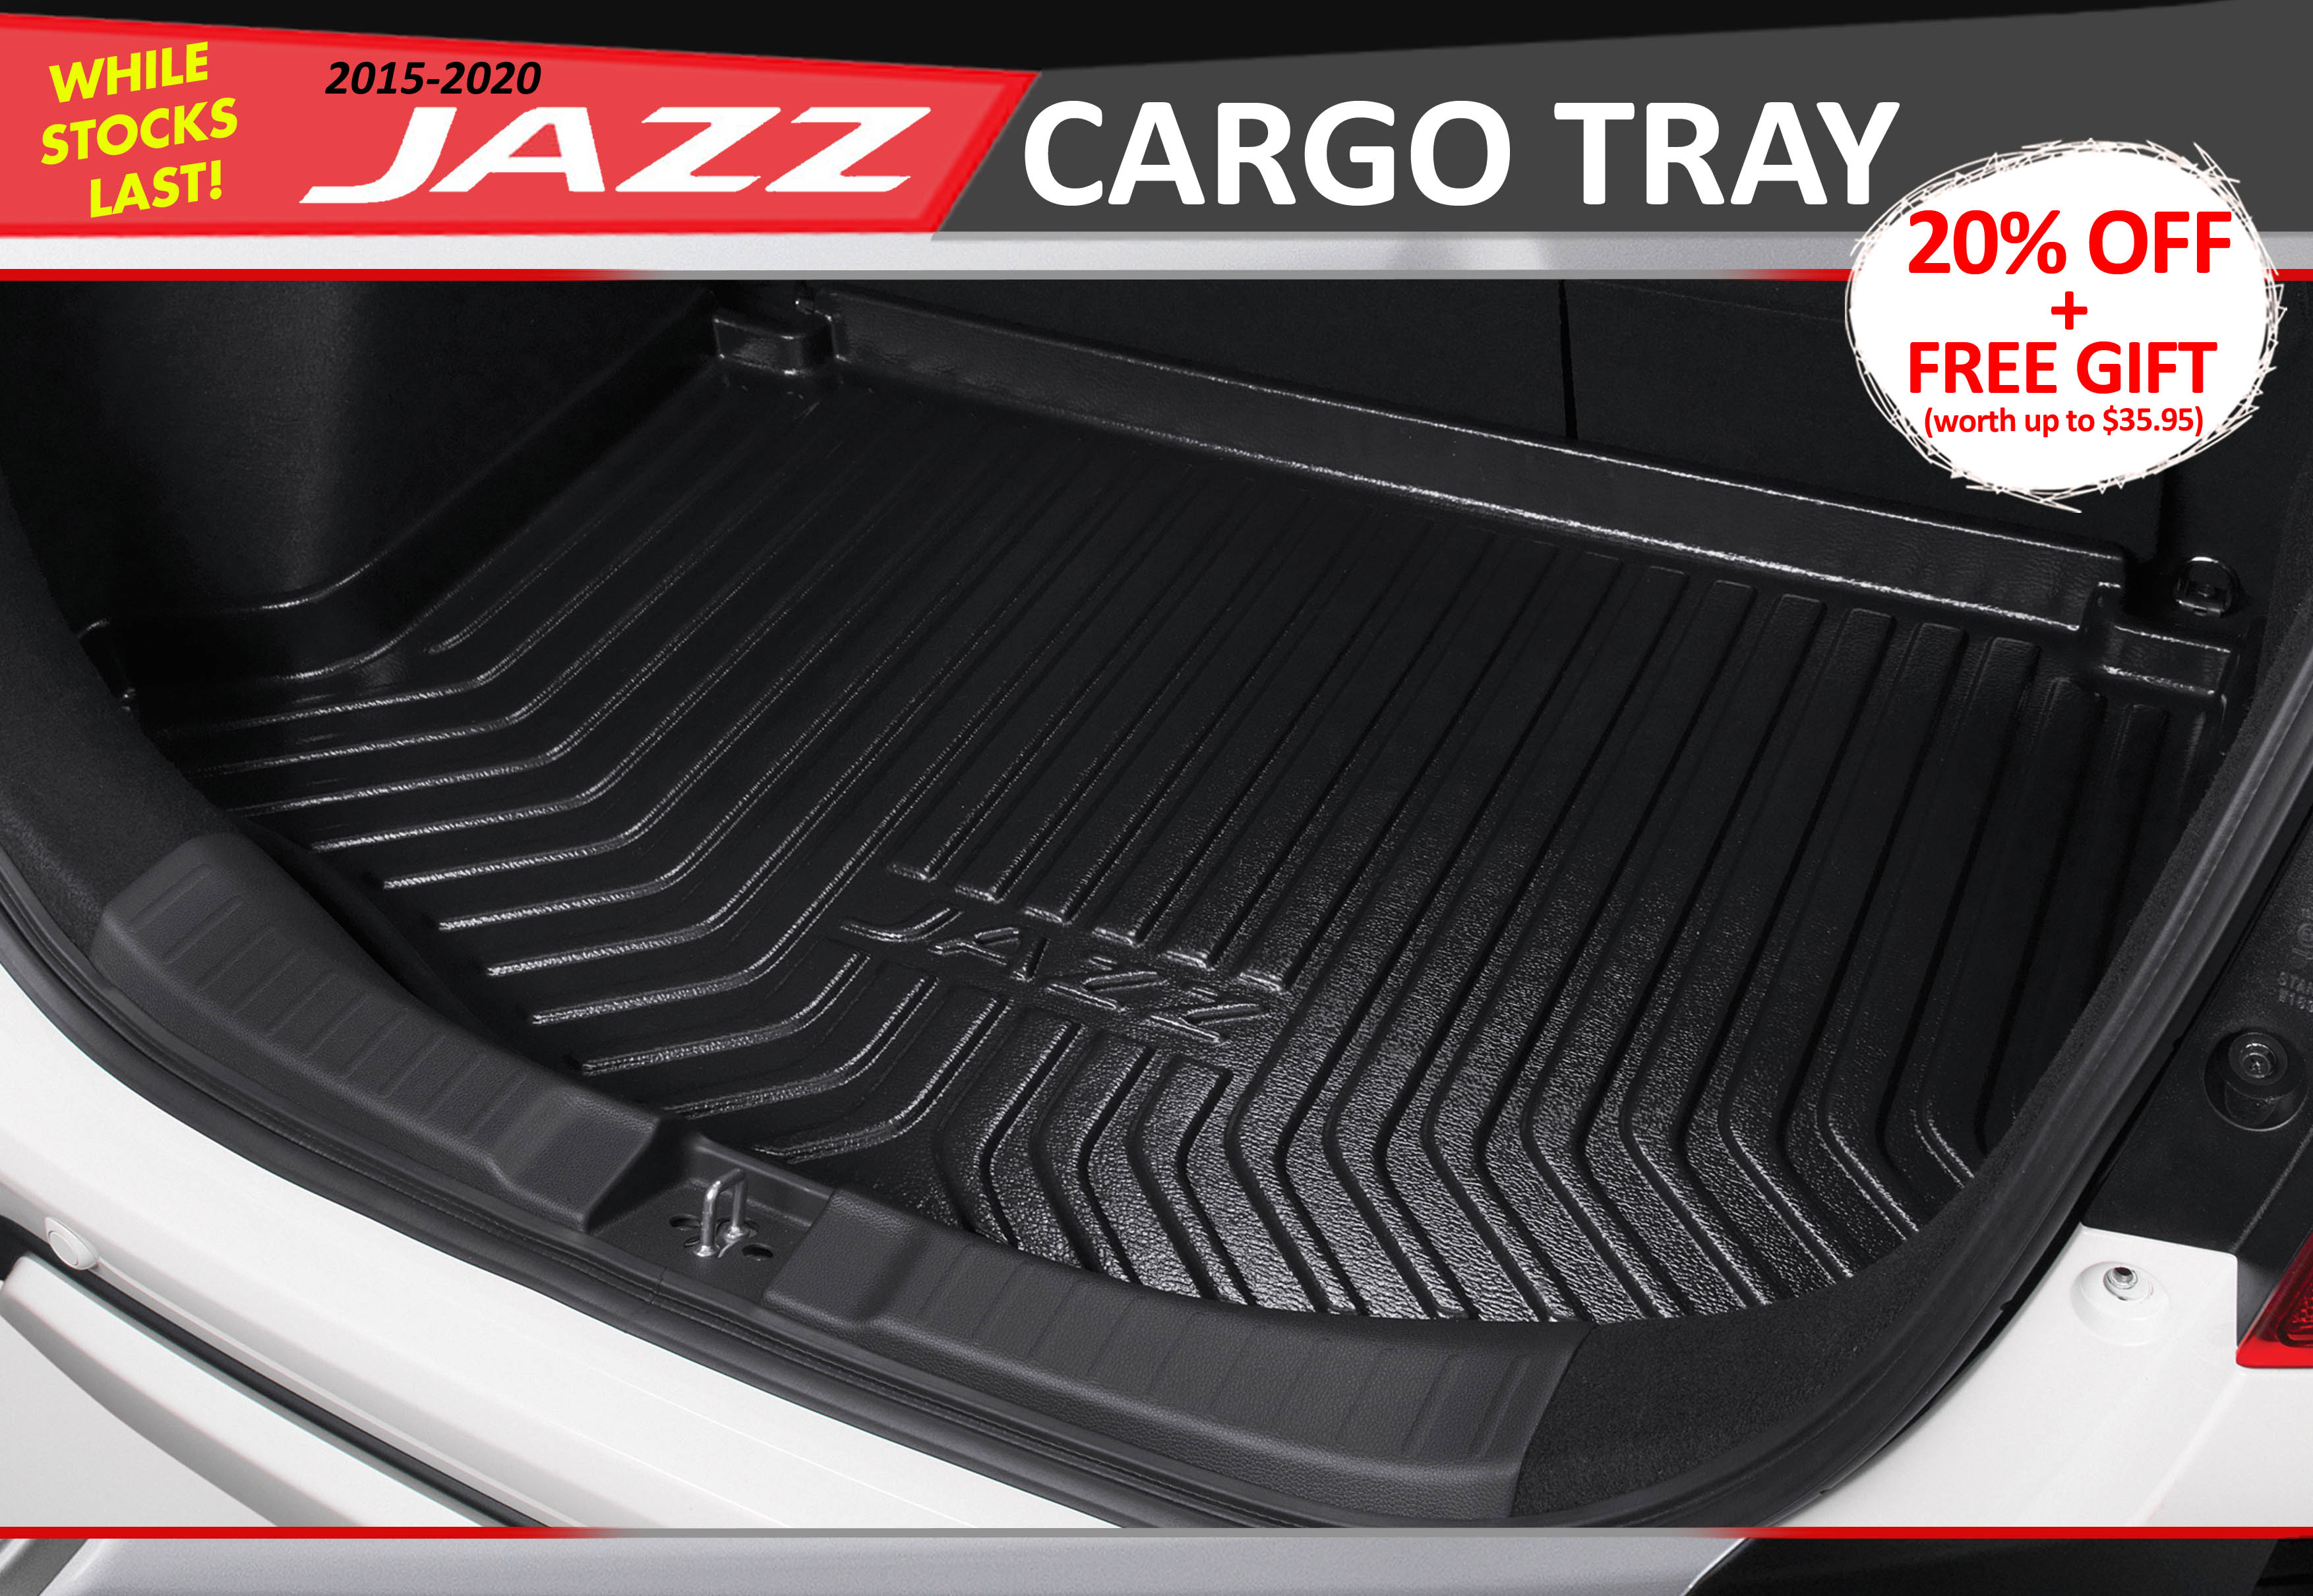 jazz_clearance01 Honda - Kah Motor - New Year Deal for Jazz Cargo Tray